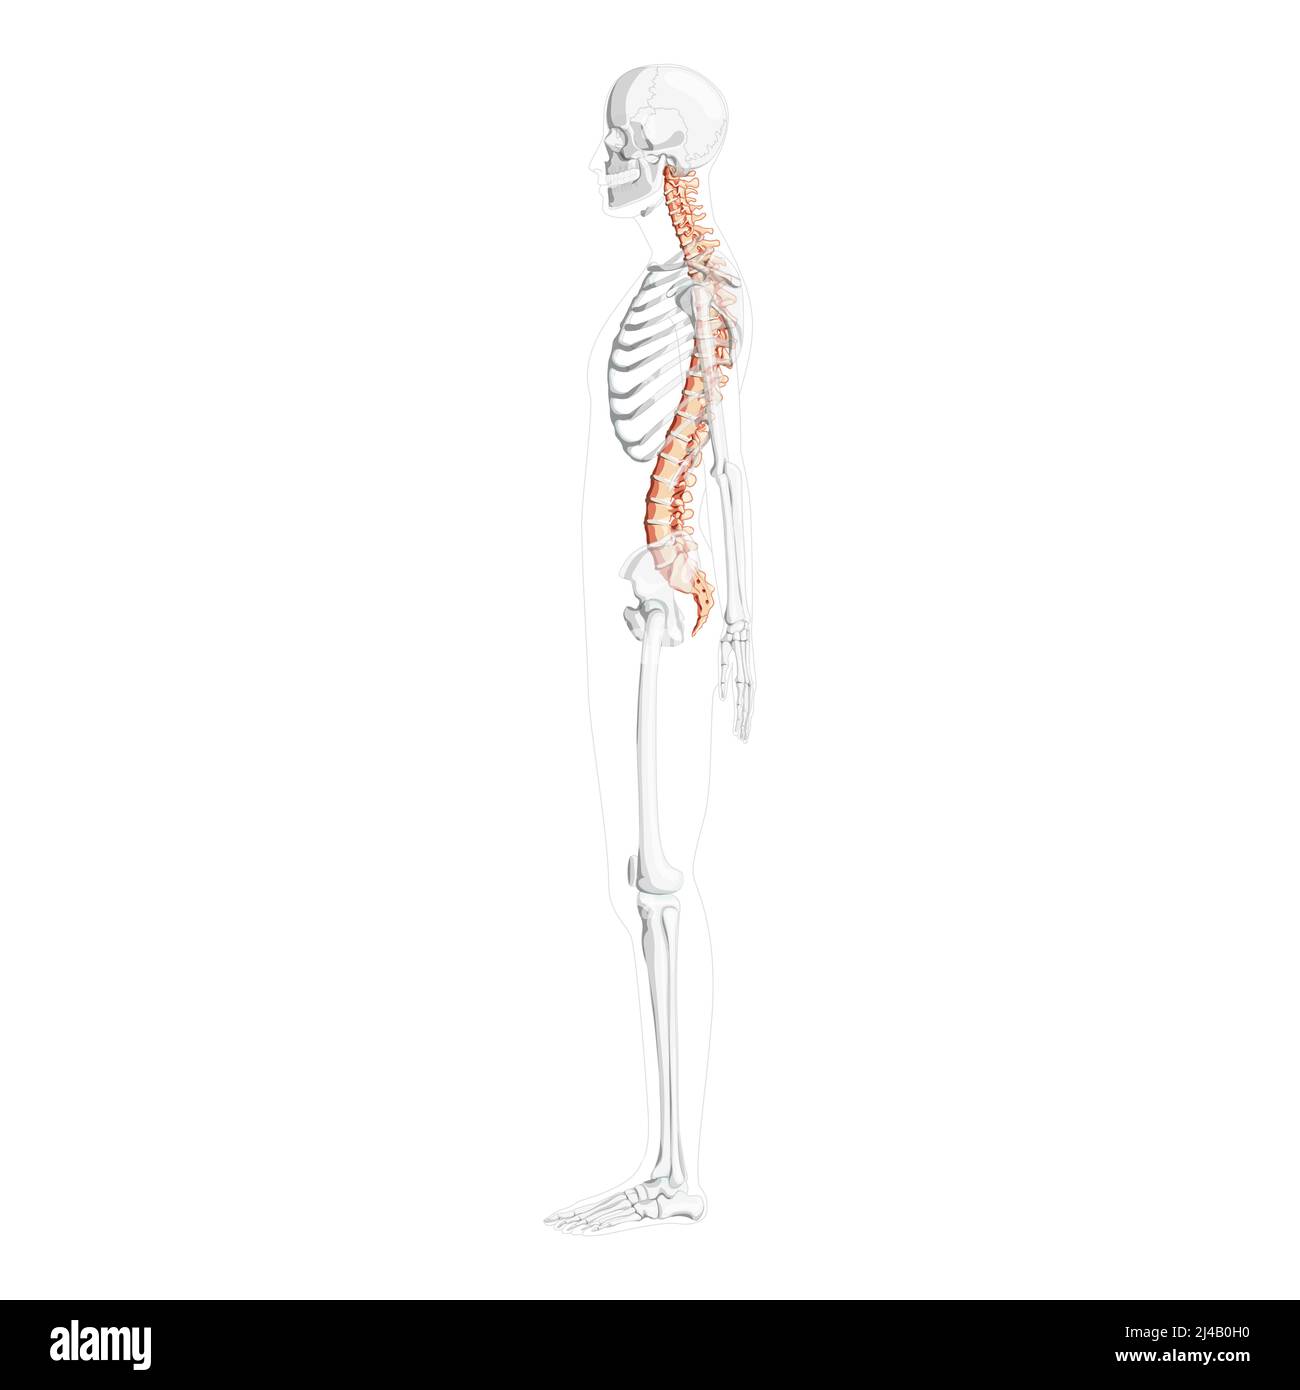 Vista lateral de la columna vertebral humana con posición de esqueleto parcialmente transparente, médula espinal, columna lumbar torácica, coccix. Colores naturales planos vectoriales, anatomía de ilustración aislada realista Ilustración del Vector